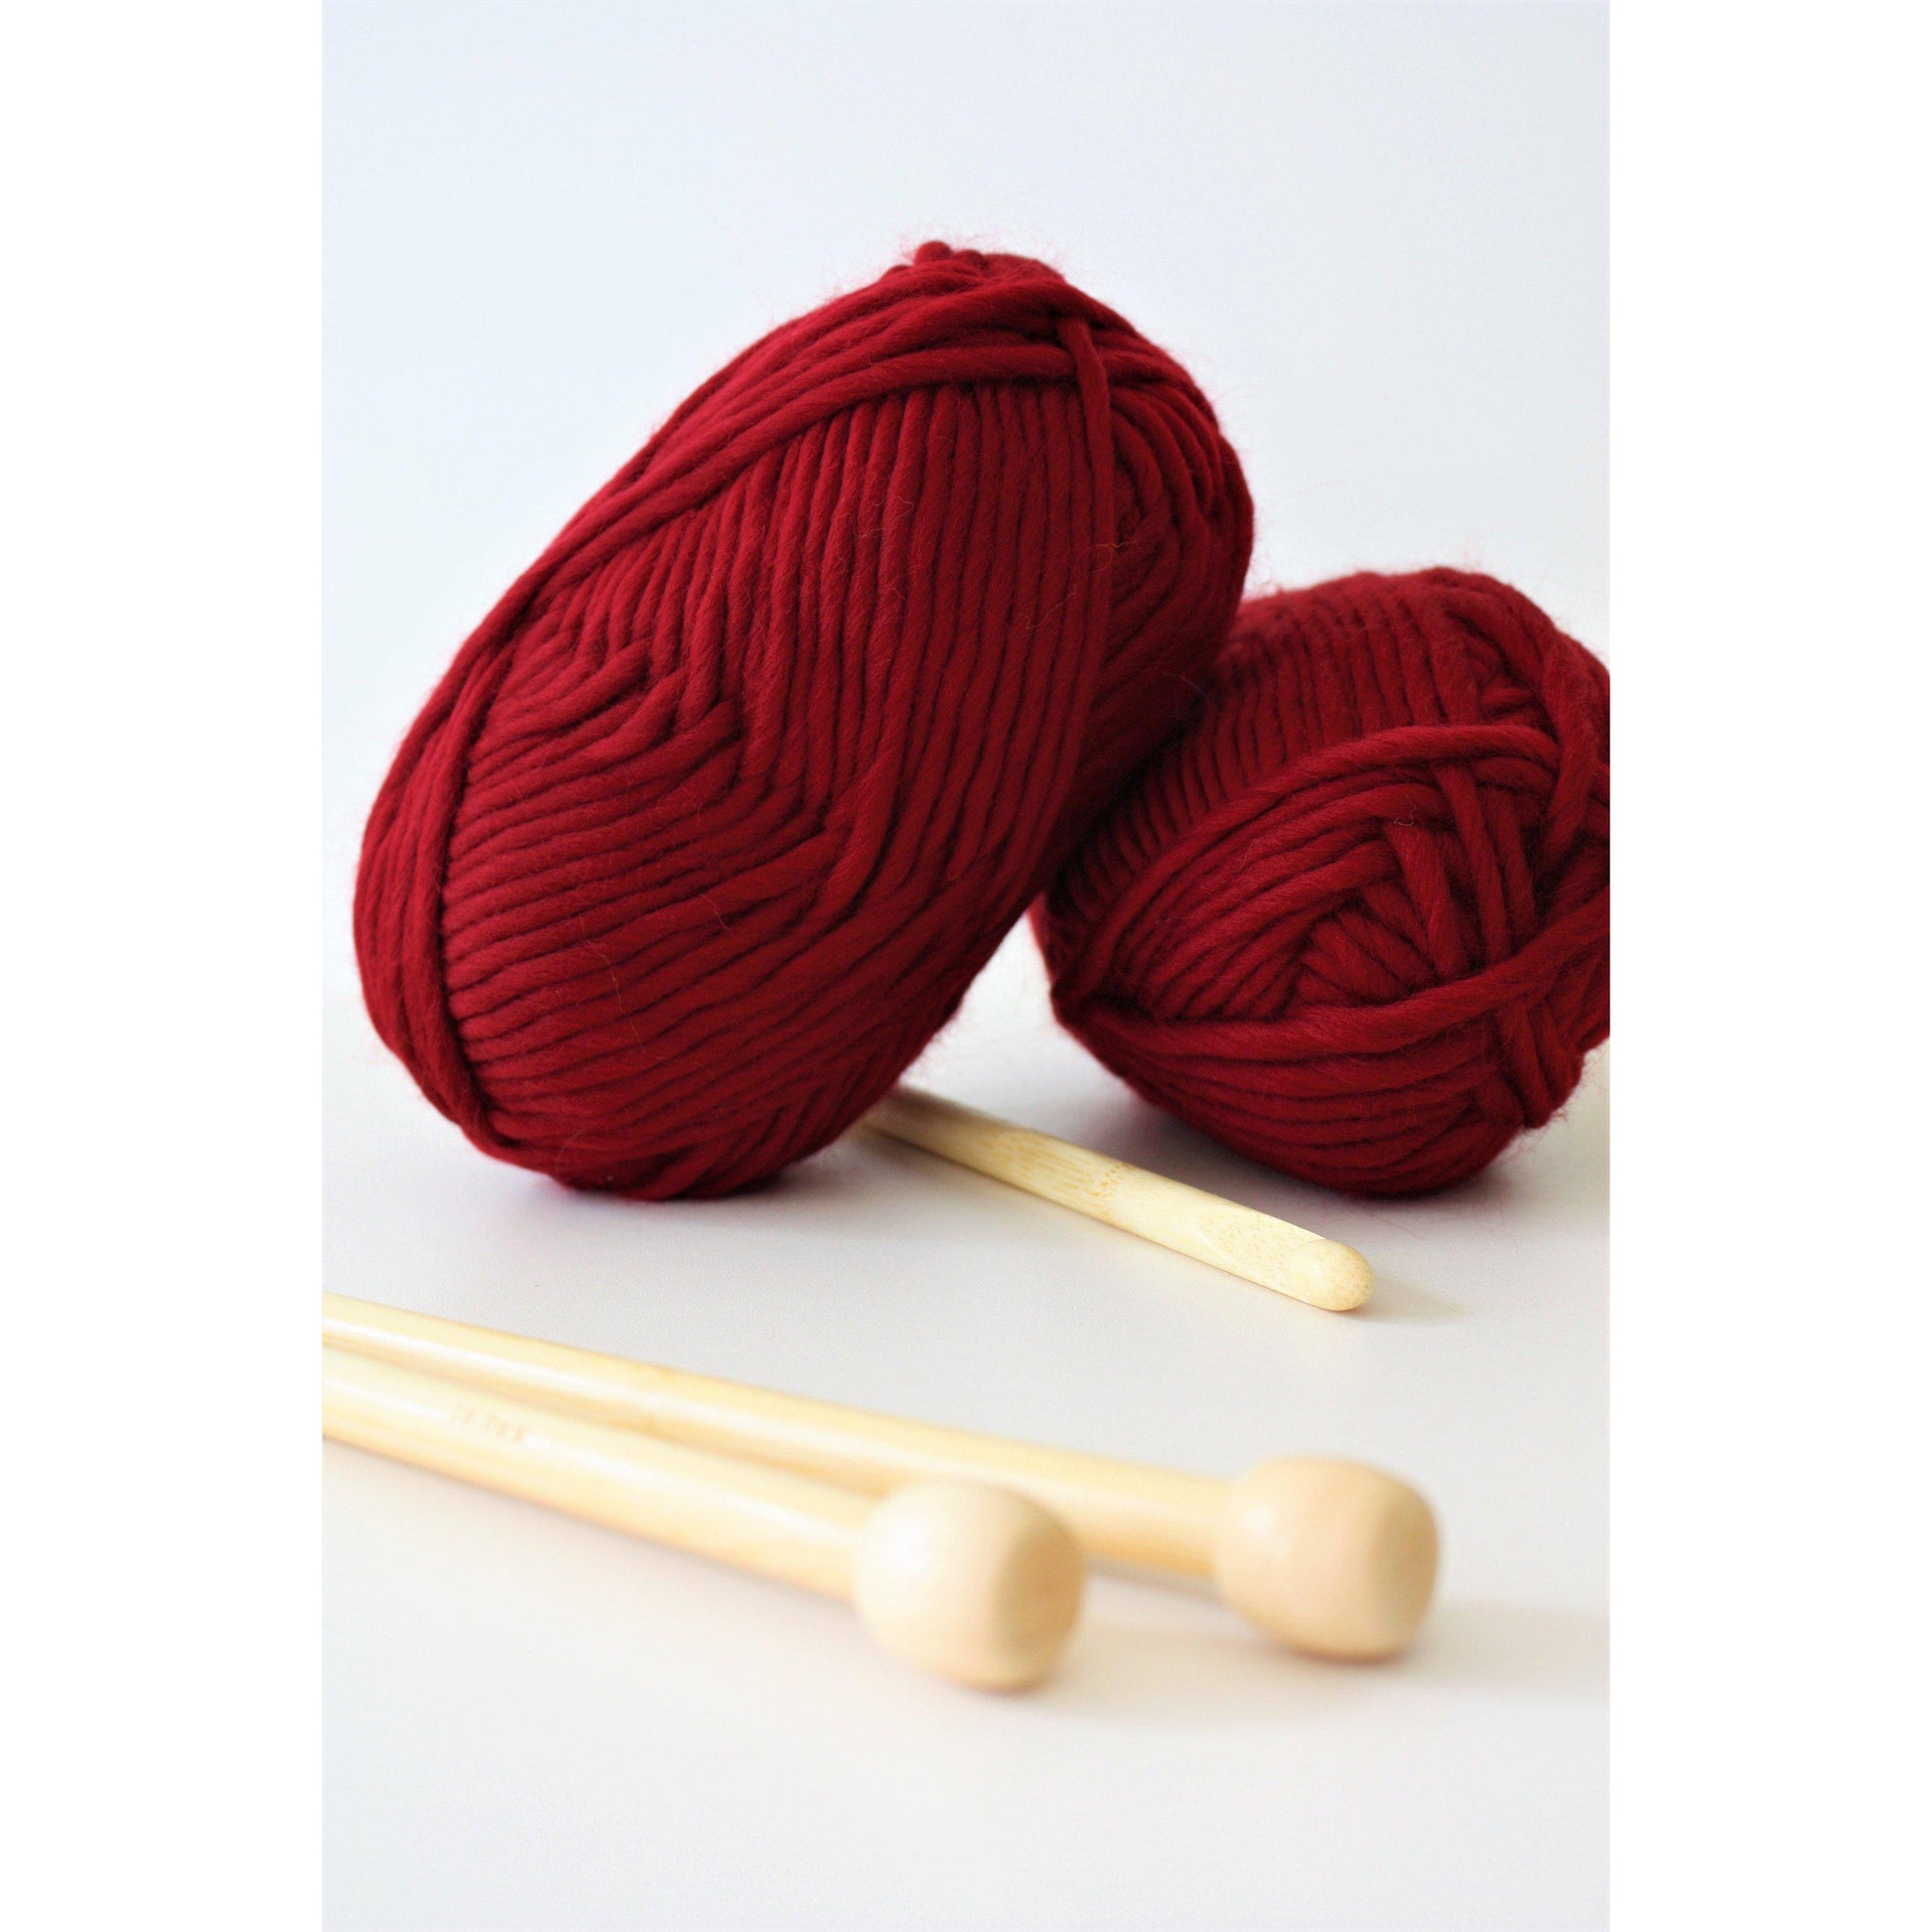 Chunky Knit Yarn, FREE SHIPPING, Merino Wool, Hand Knitting, Super